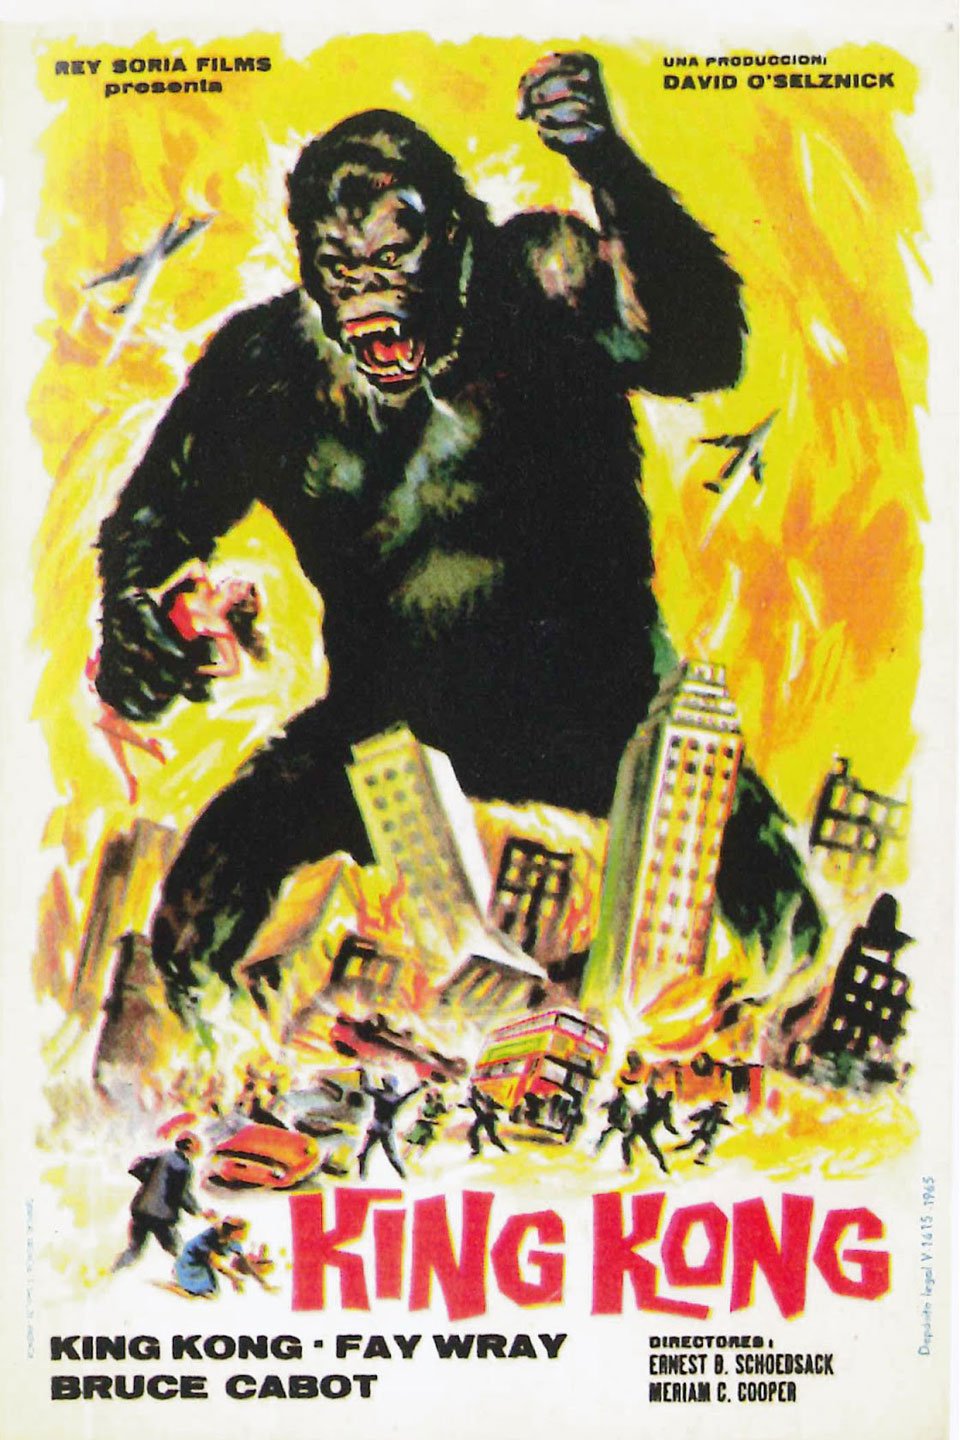 King Kong streaming